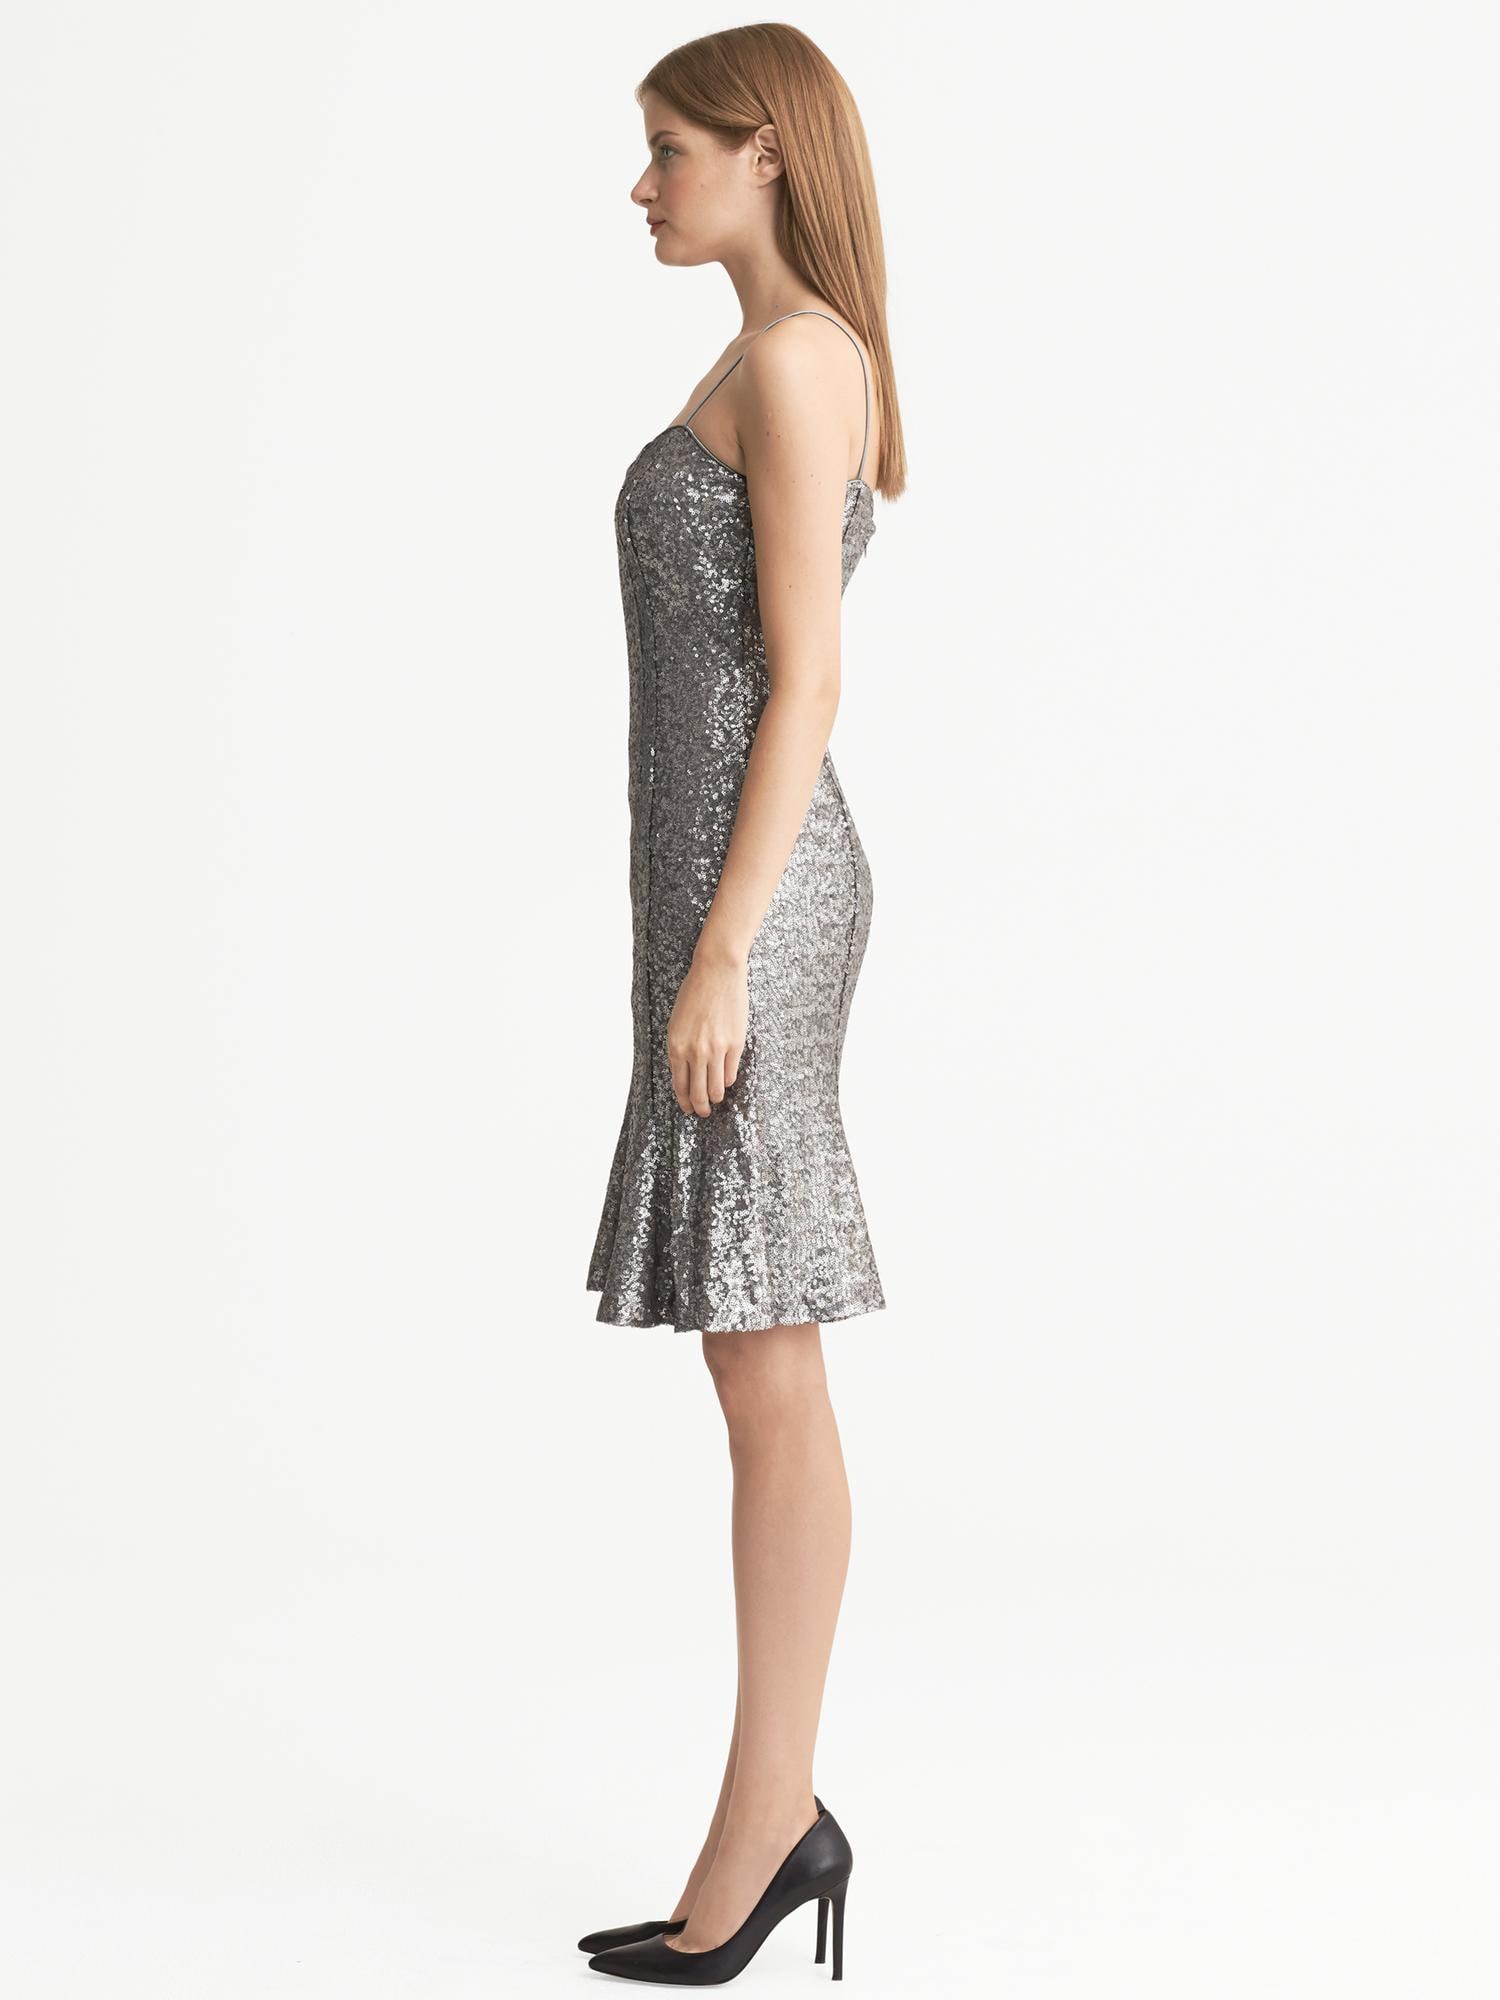 L'Wren Scott Collection Sequin Wiggle Dress